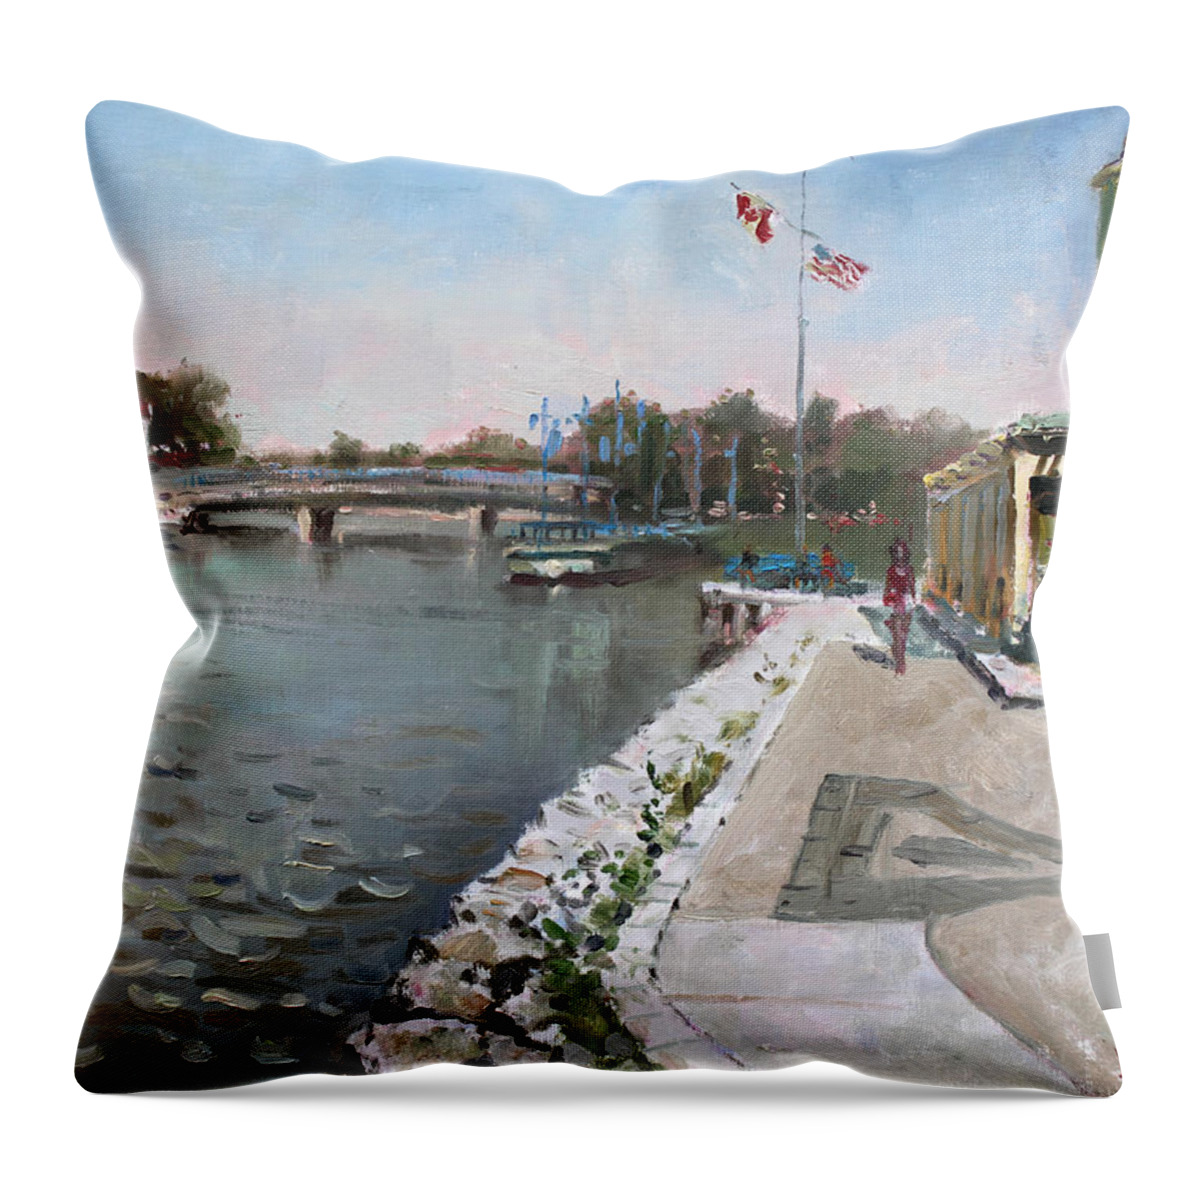 Snug Harbour Restaurant Throw Pillow featuring the painting Snug Harbour Restaurant by Ylli Haruni